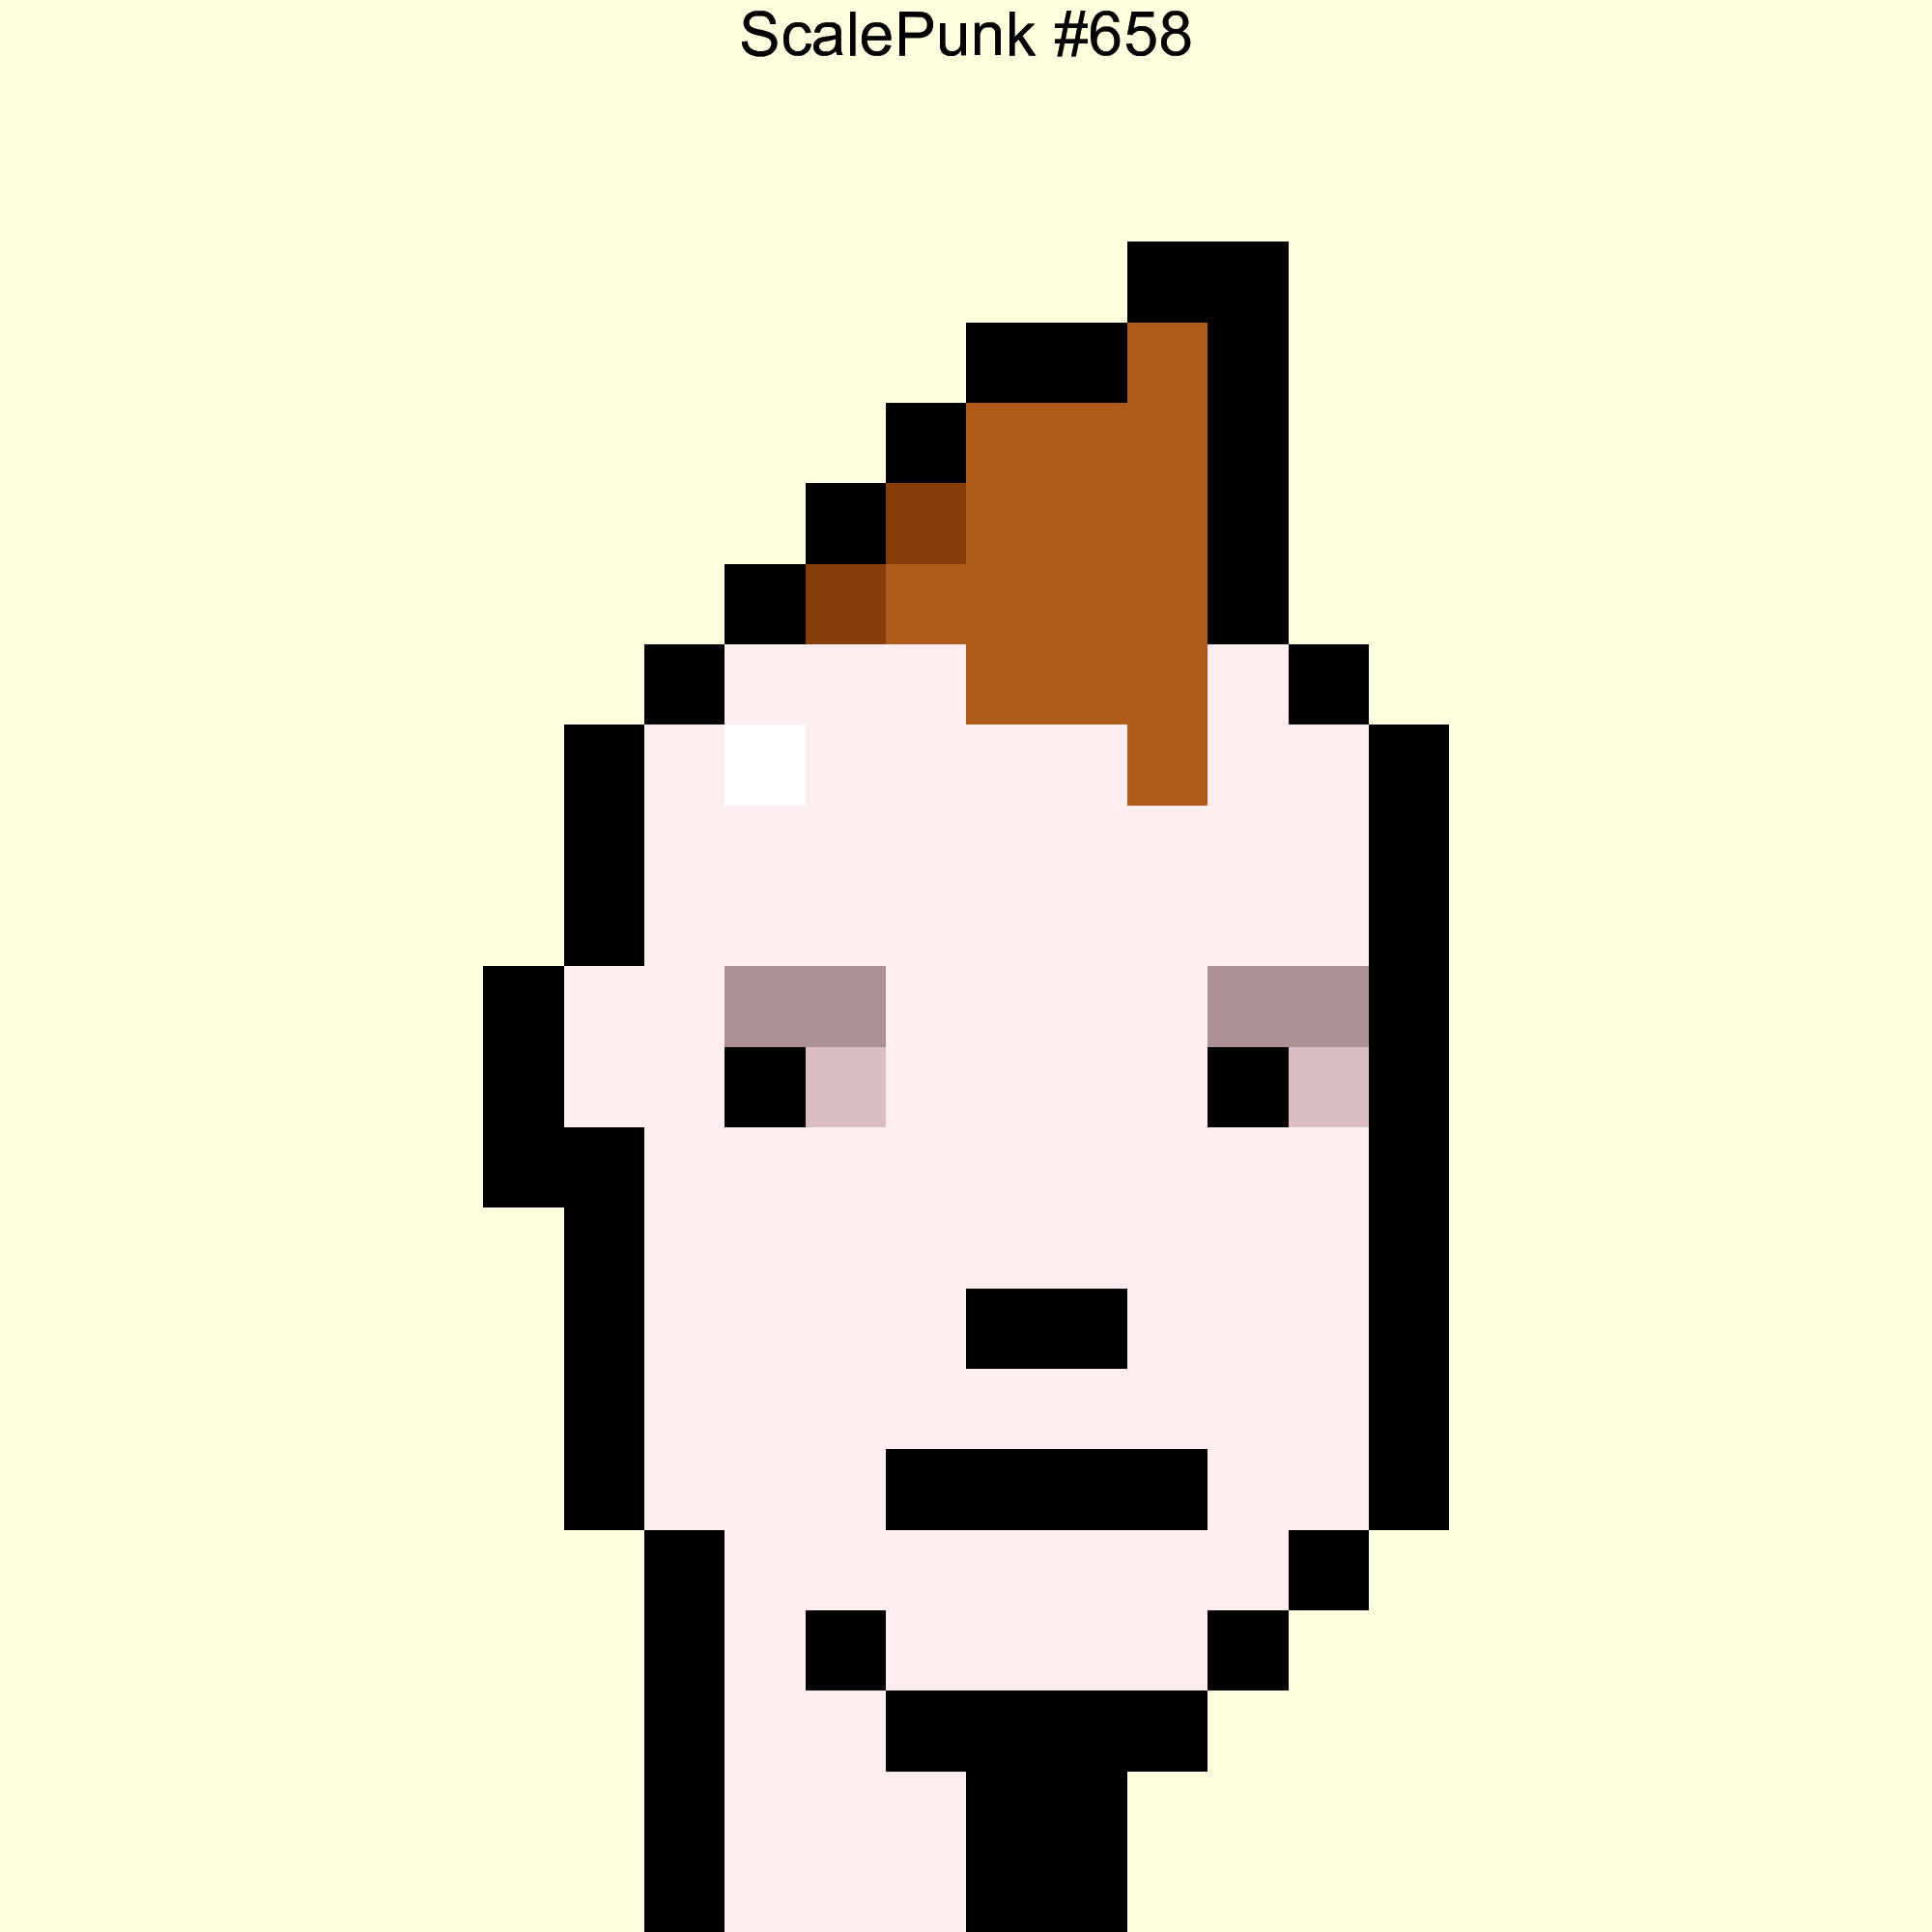 Punk 658